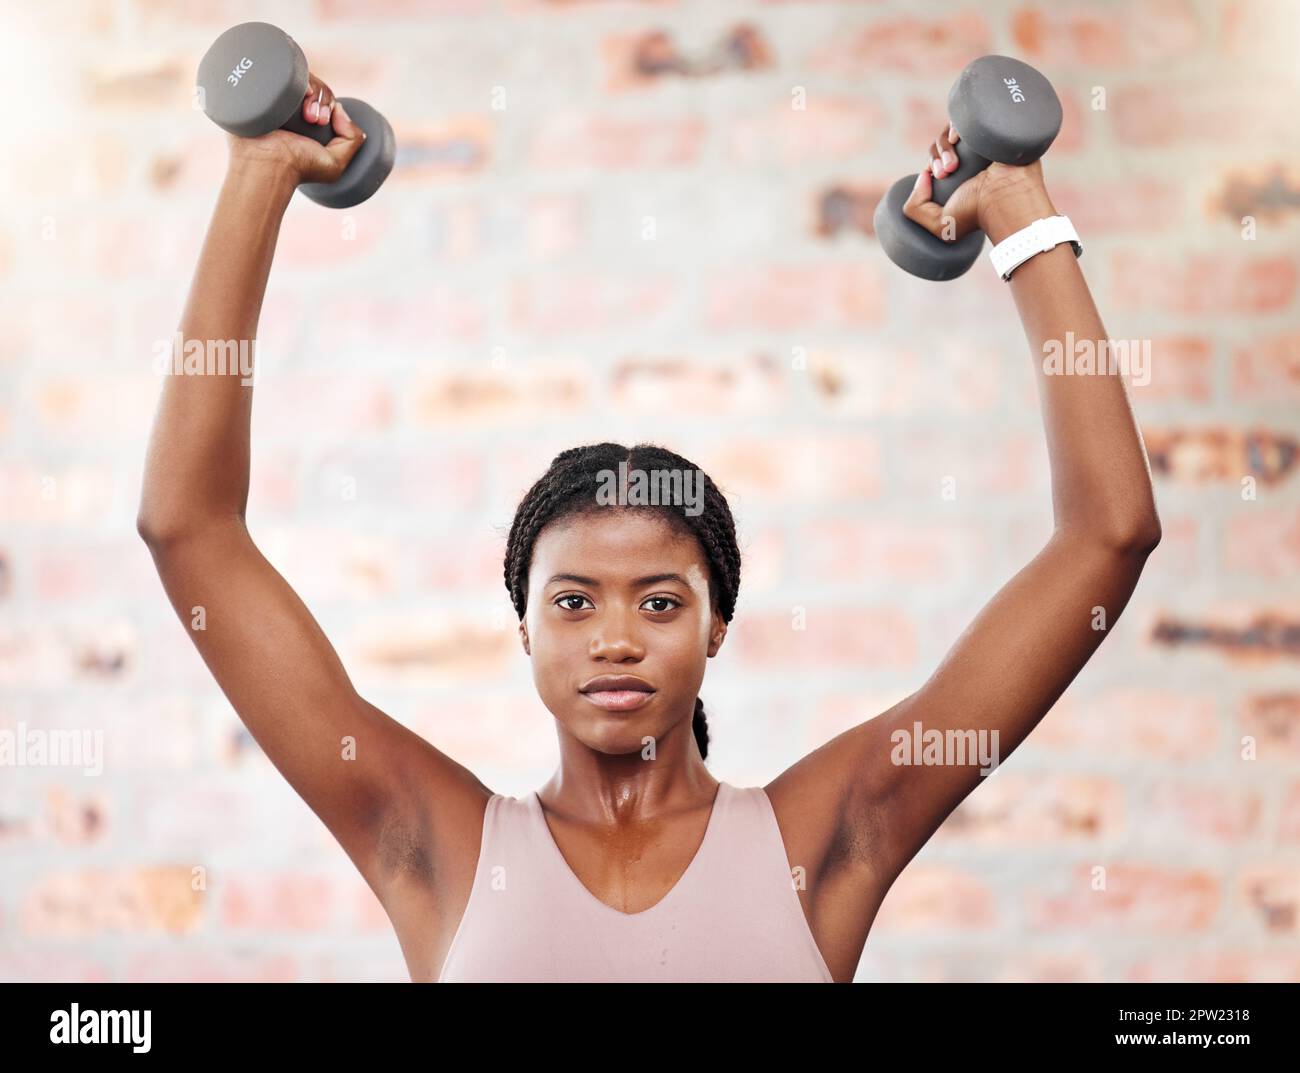 Body goals!  Fitness girls, Fitness inspiration, Muscle girls